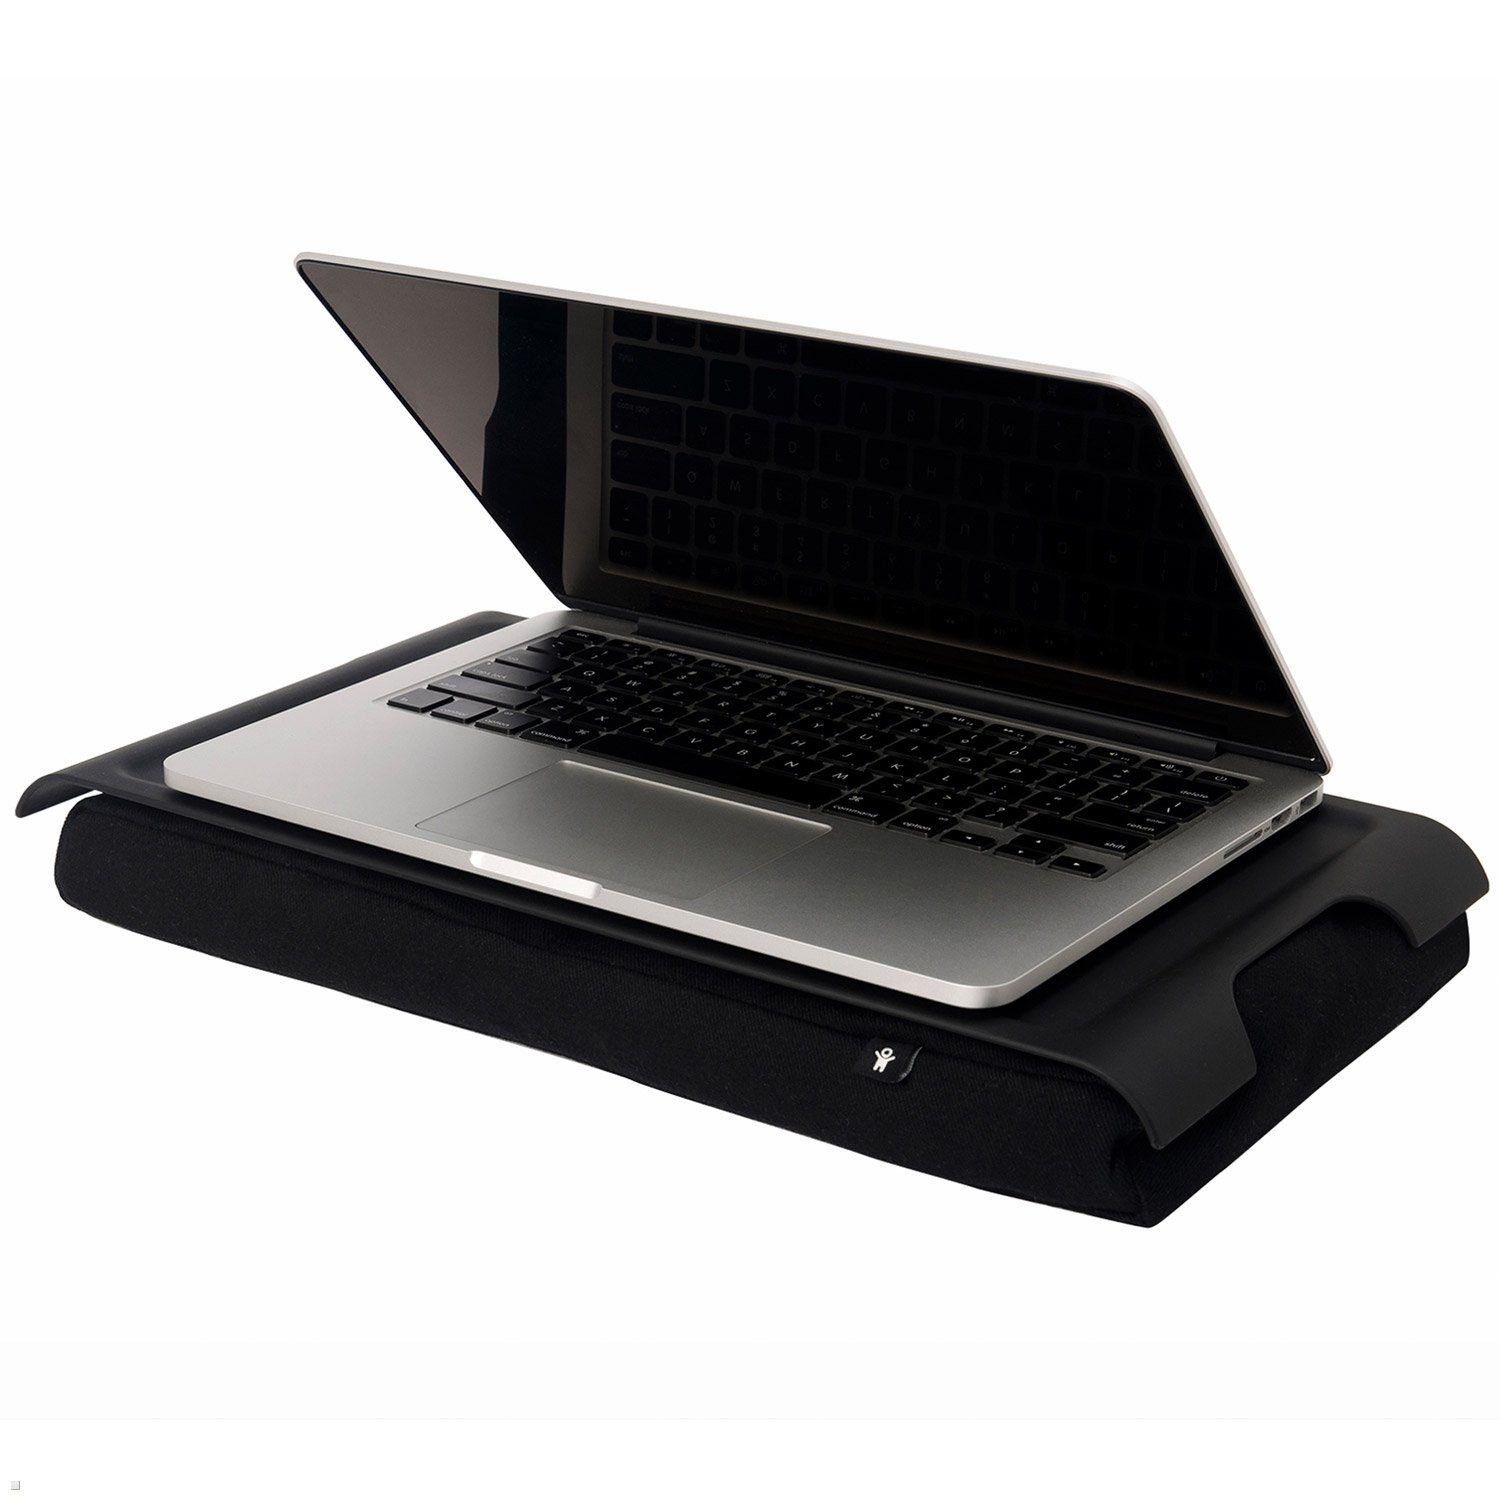 Laptray, Mini Bosign Baumwolle Kunststoff, Laptop Tablett schwarz